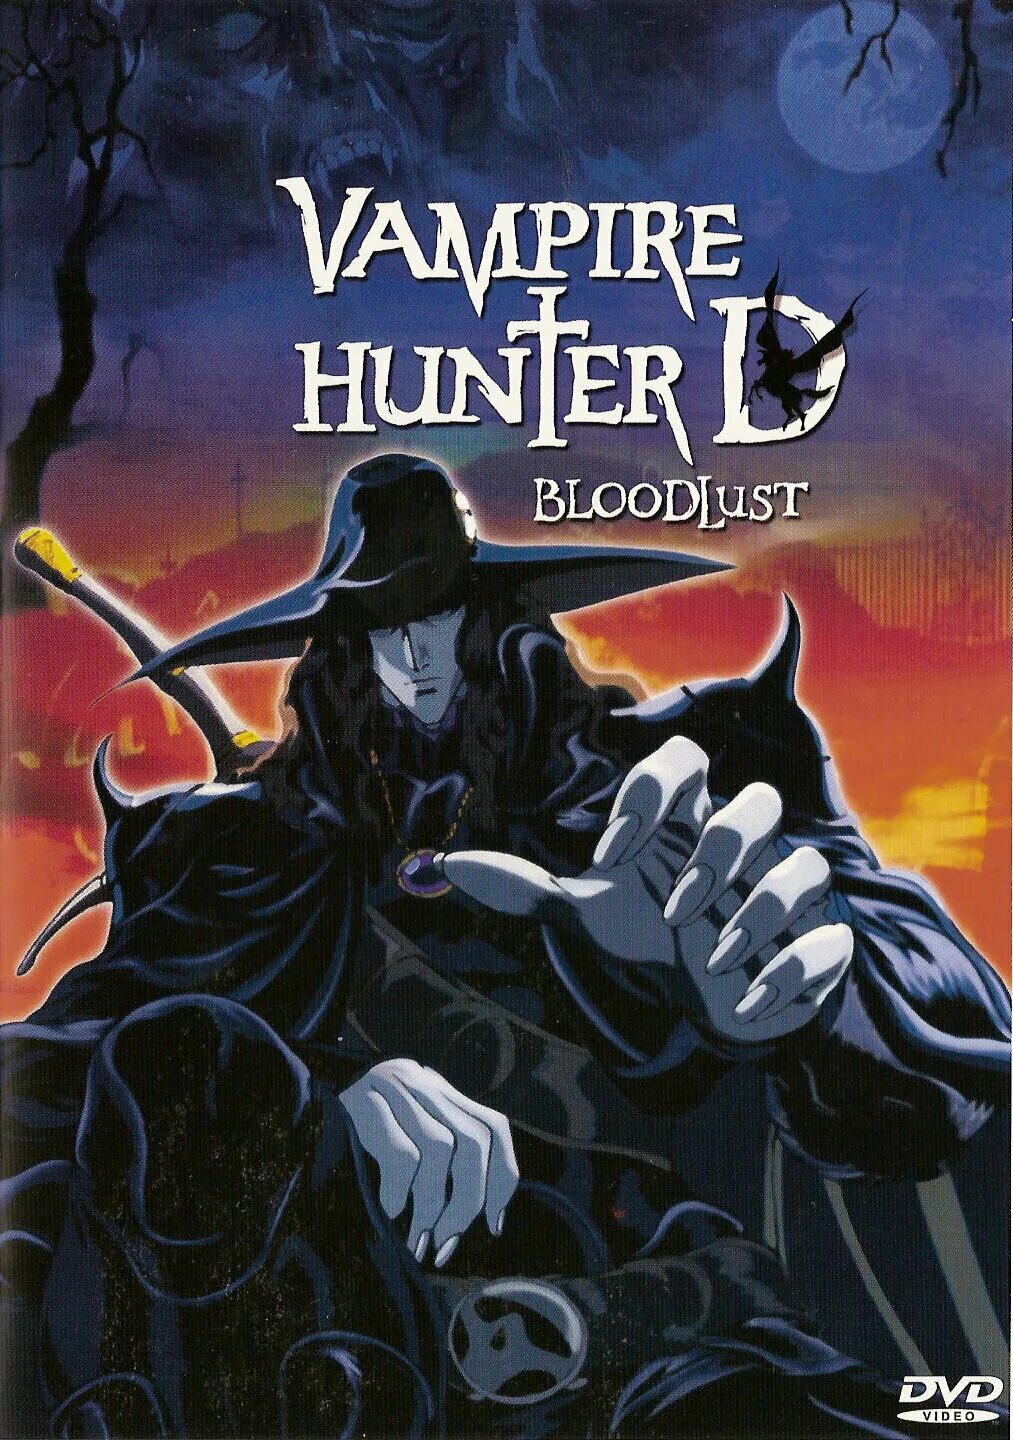 Ада хантер. Вампир Хантер д жажда крови. Ди охотник на вампиров жажда крови. Ди жажда крови 2001.